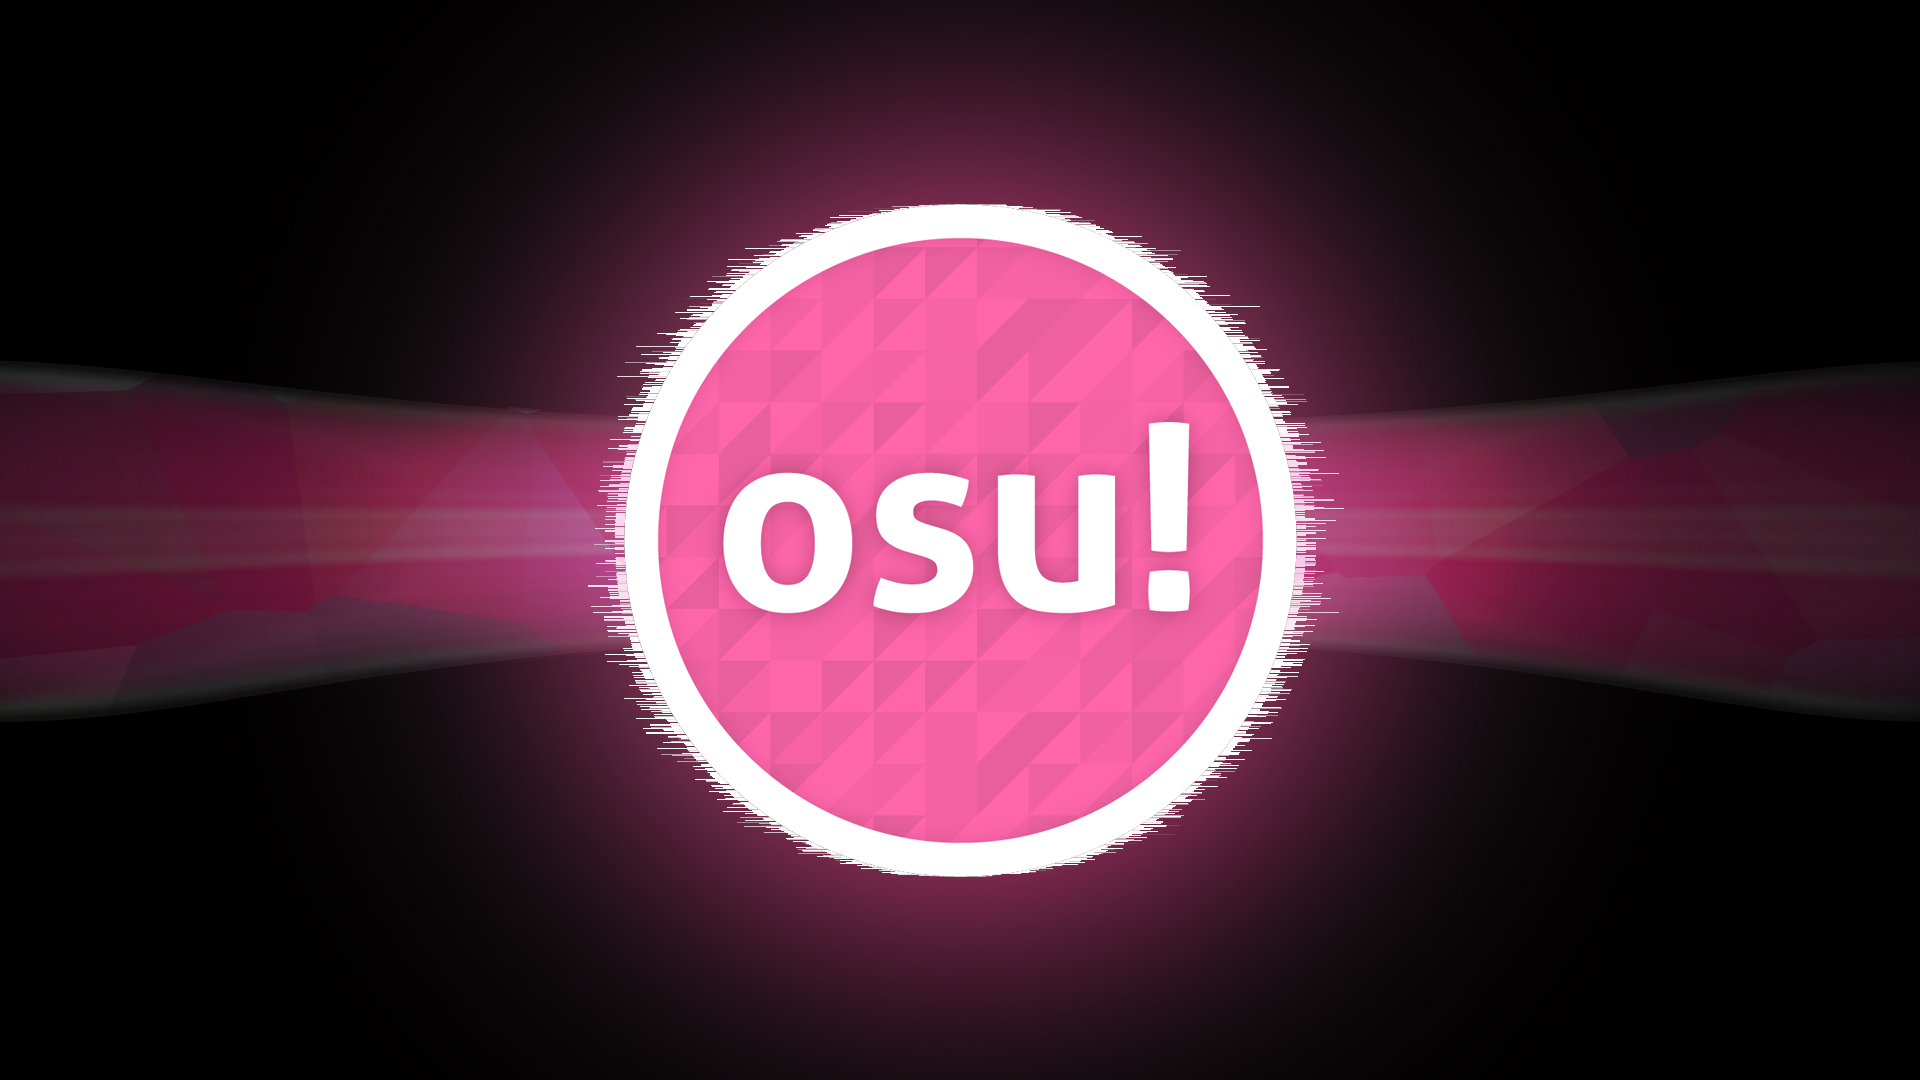 Ballout osu. Osu. Osu логотип. Osu игра. Osu картинки.